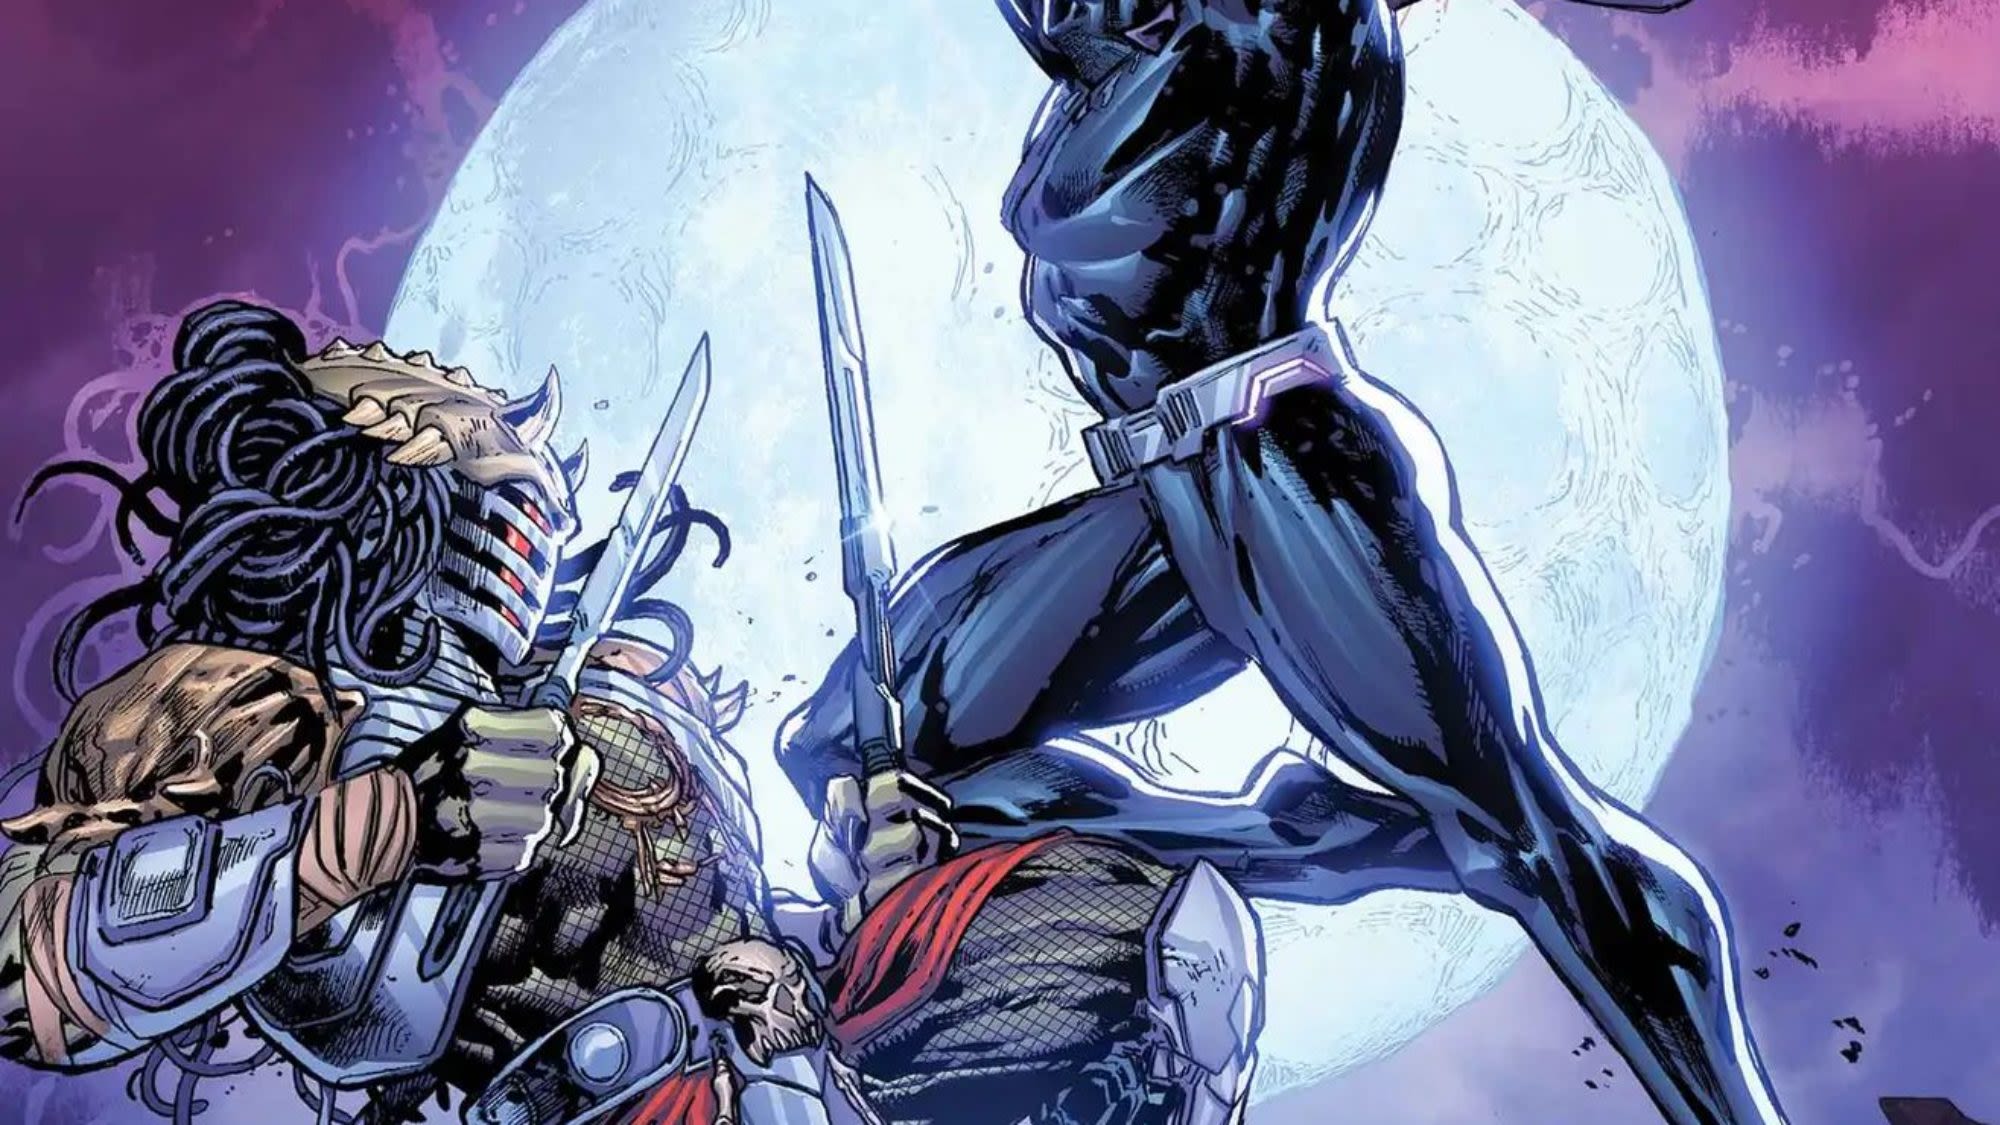 Predator Vs Black Panther by Benjamin Percy & Chris Allen from Marvel